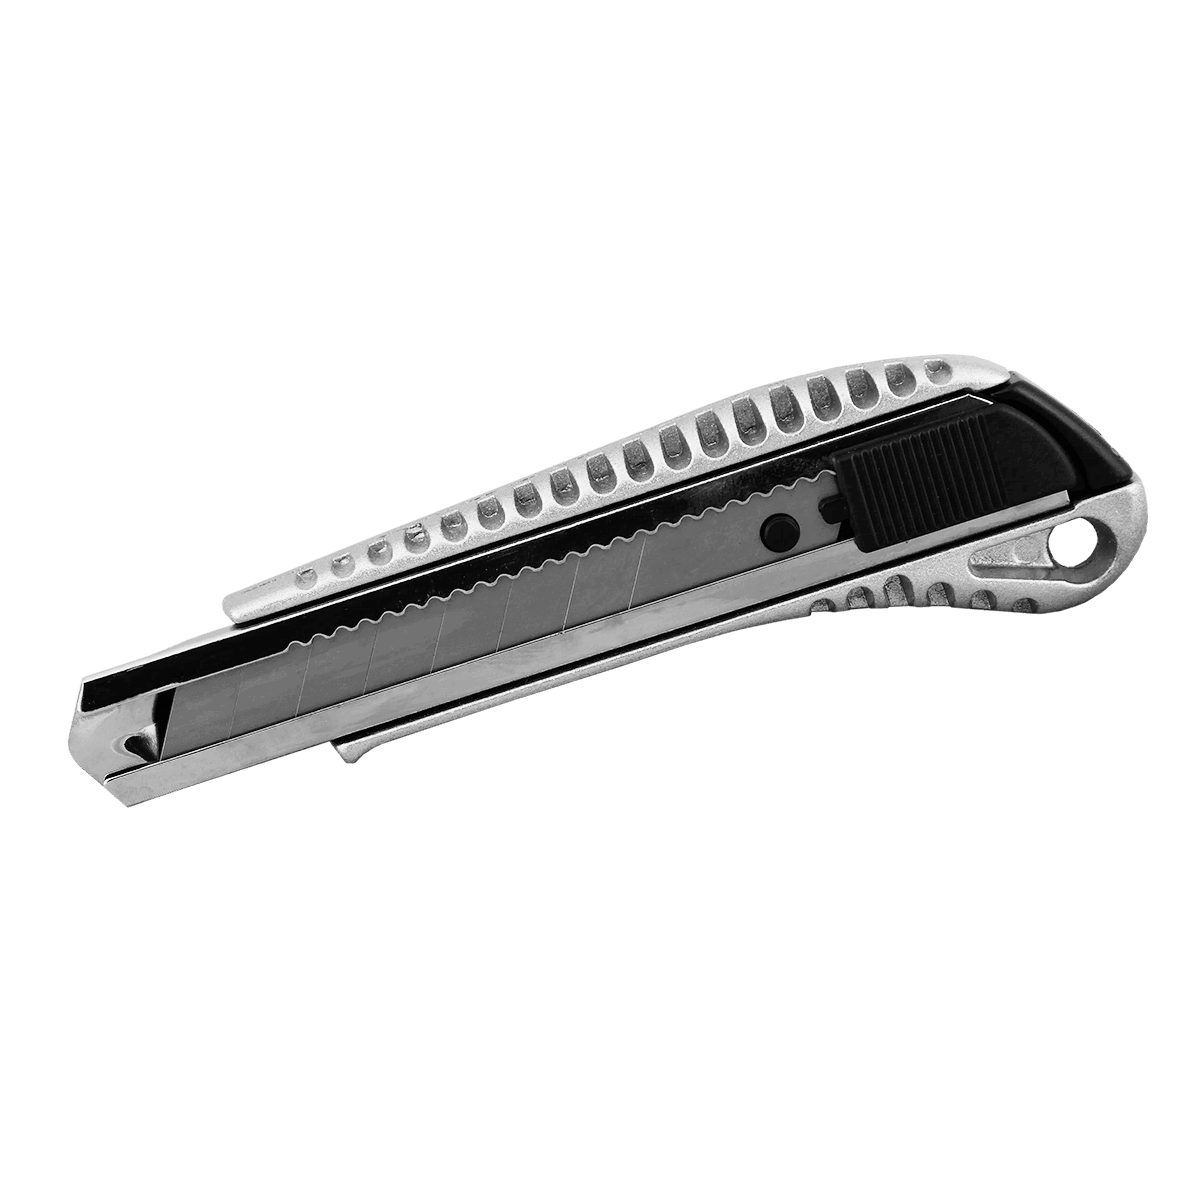 TRIZERATOP Cuttermesser Cuttermesser Teppichmesser Alu 18 mm, (1x 1x Abbrechmesser Cutter)